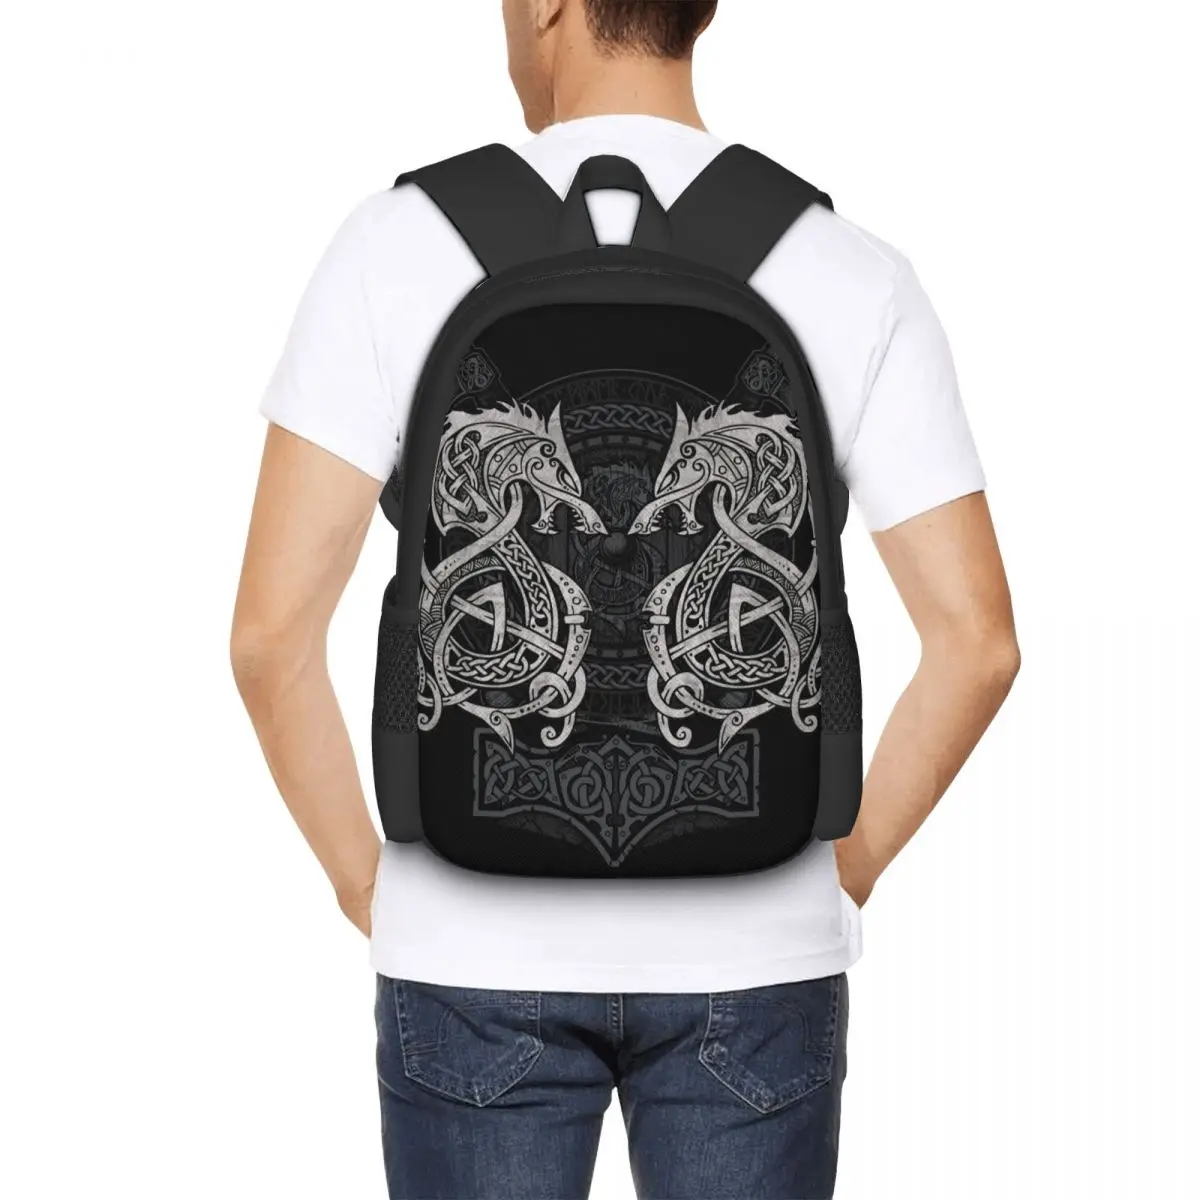 Fighting Fenrir Backpack for Girls Boys Travel RucksackBackpacks for Teenage school bag